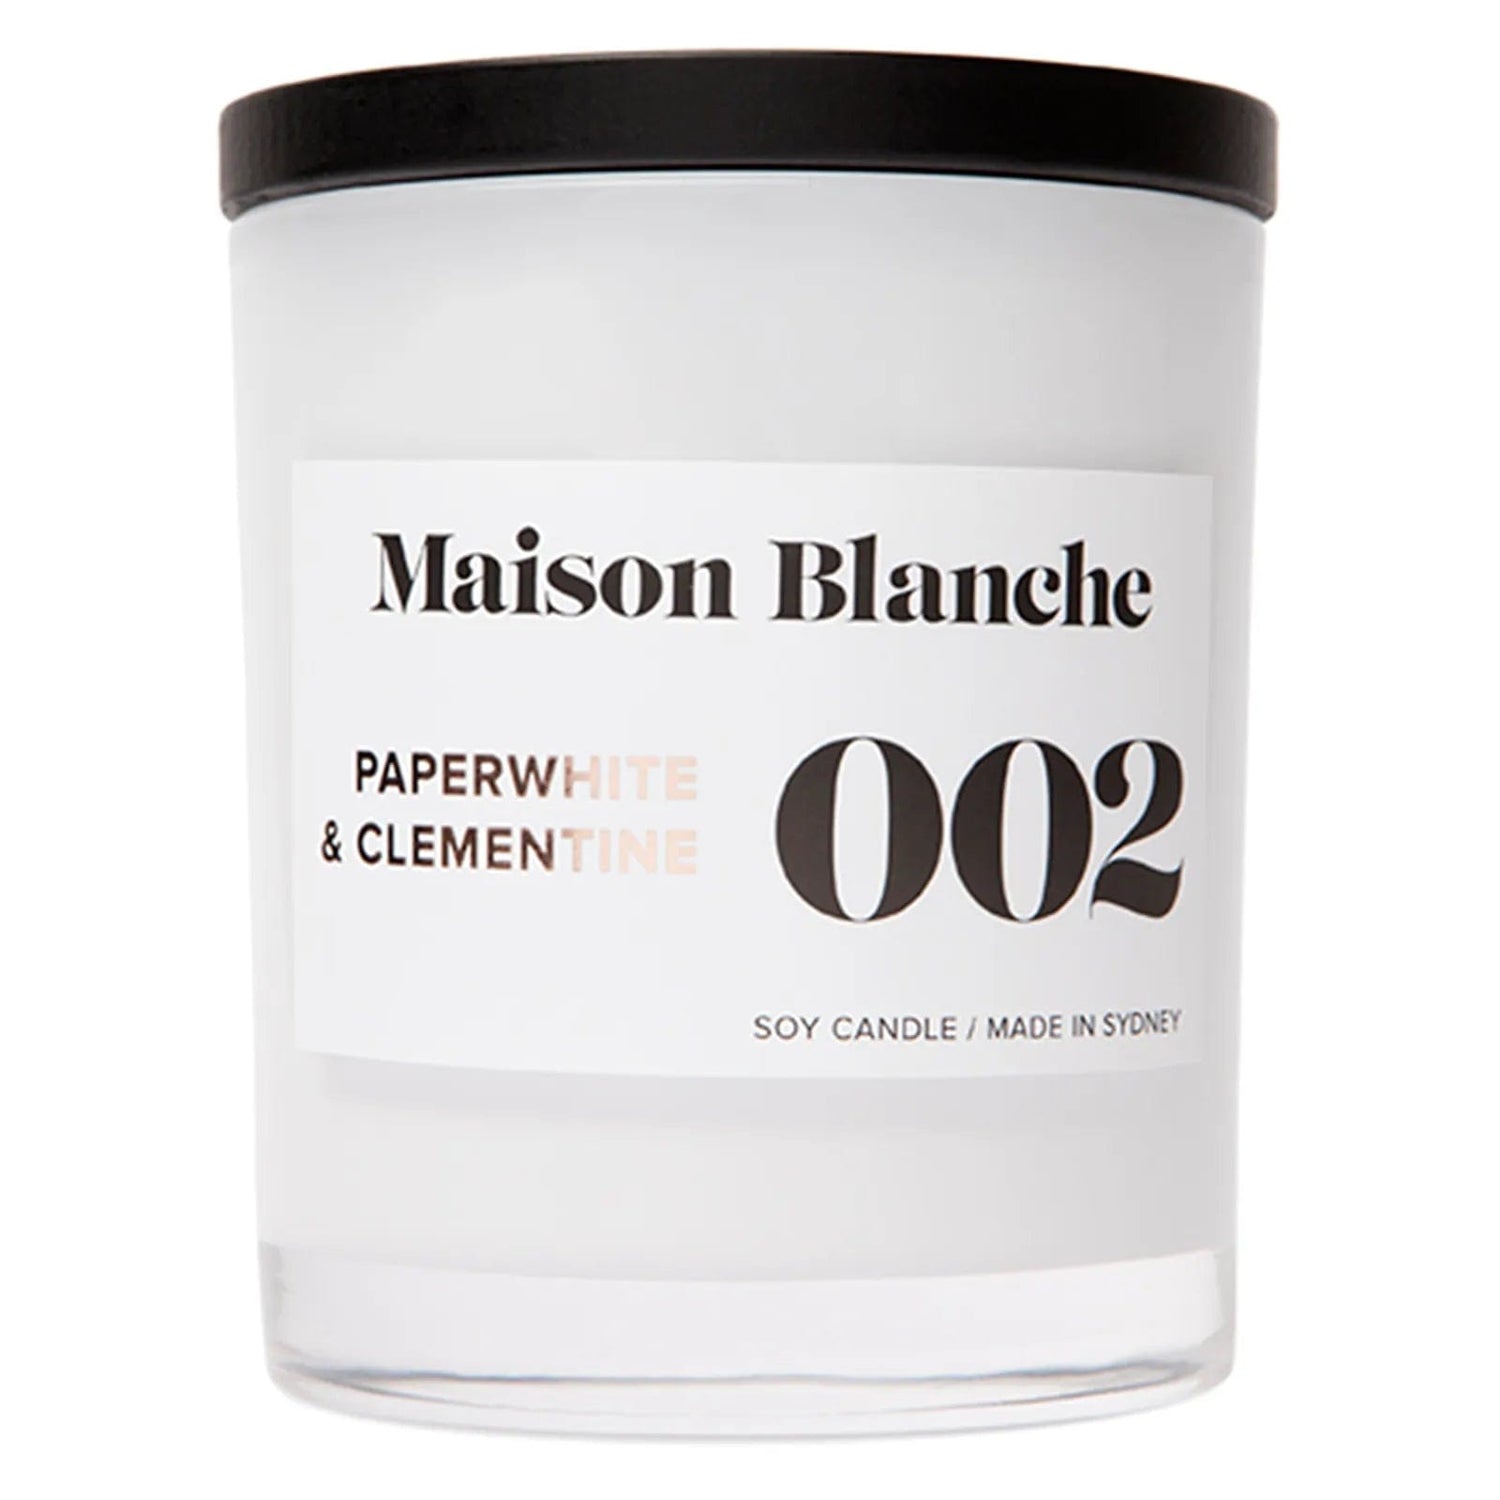 MAISON BLANCHE Maison Blanche Pure Soy Candles